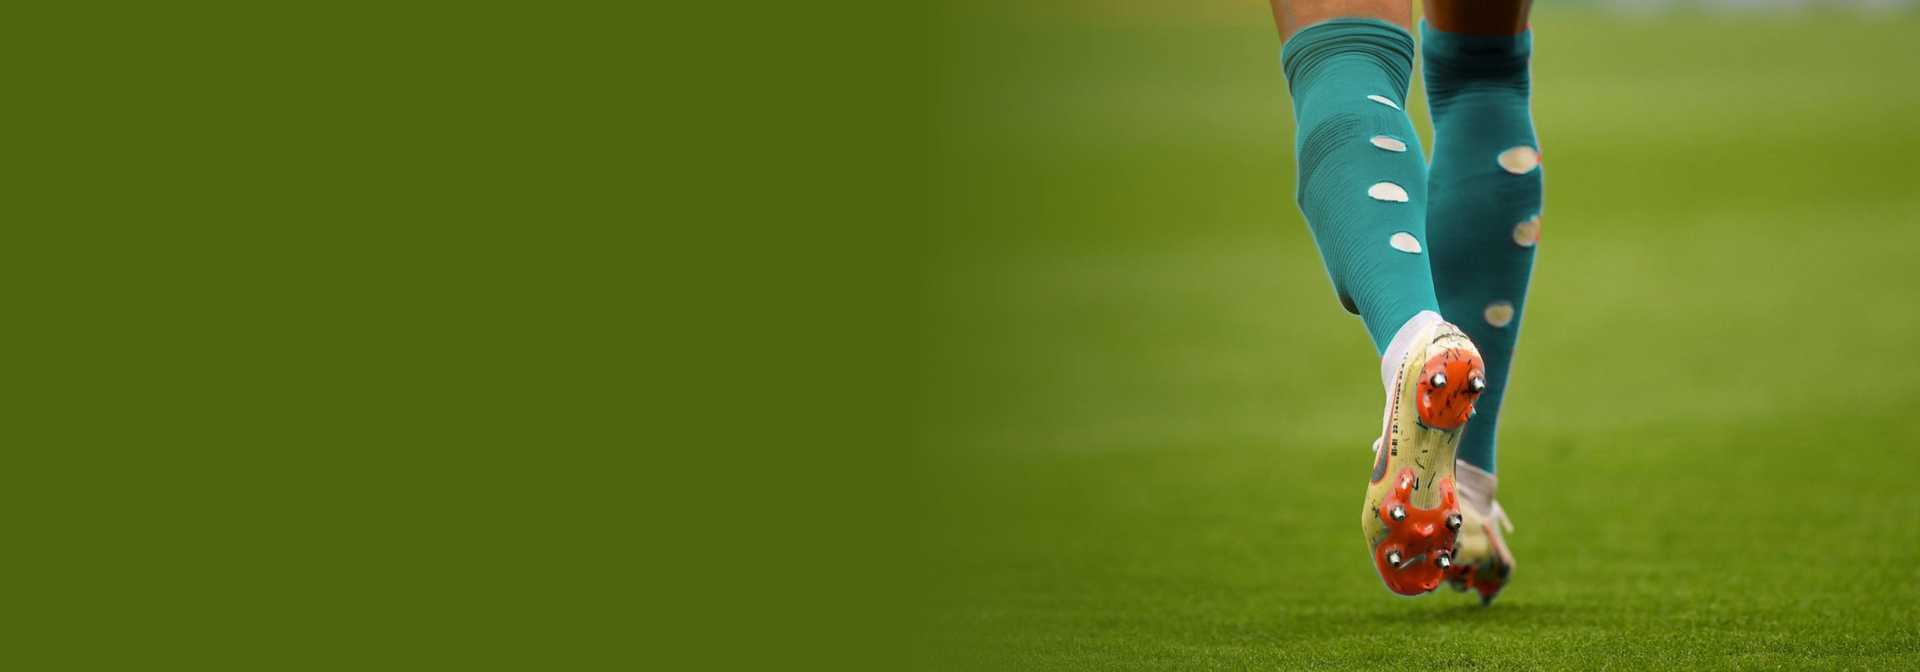 Why Do Soccer Players Cut Their Socks?